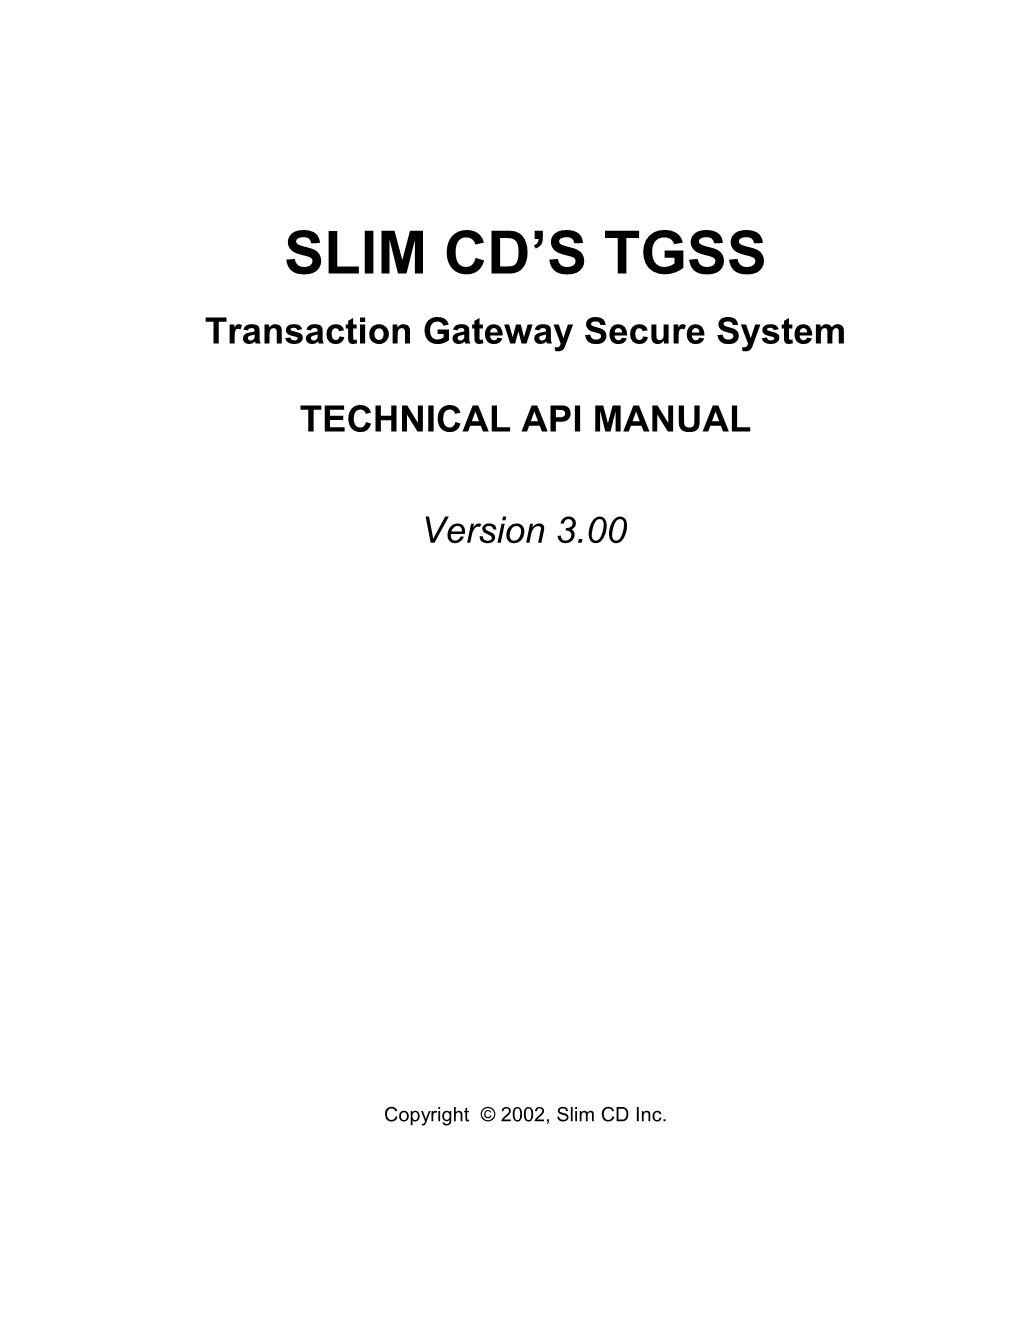 Transaction Gateway Secure System